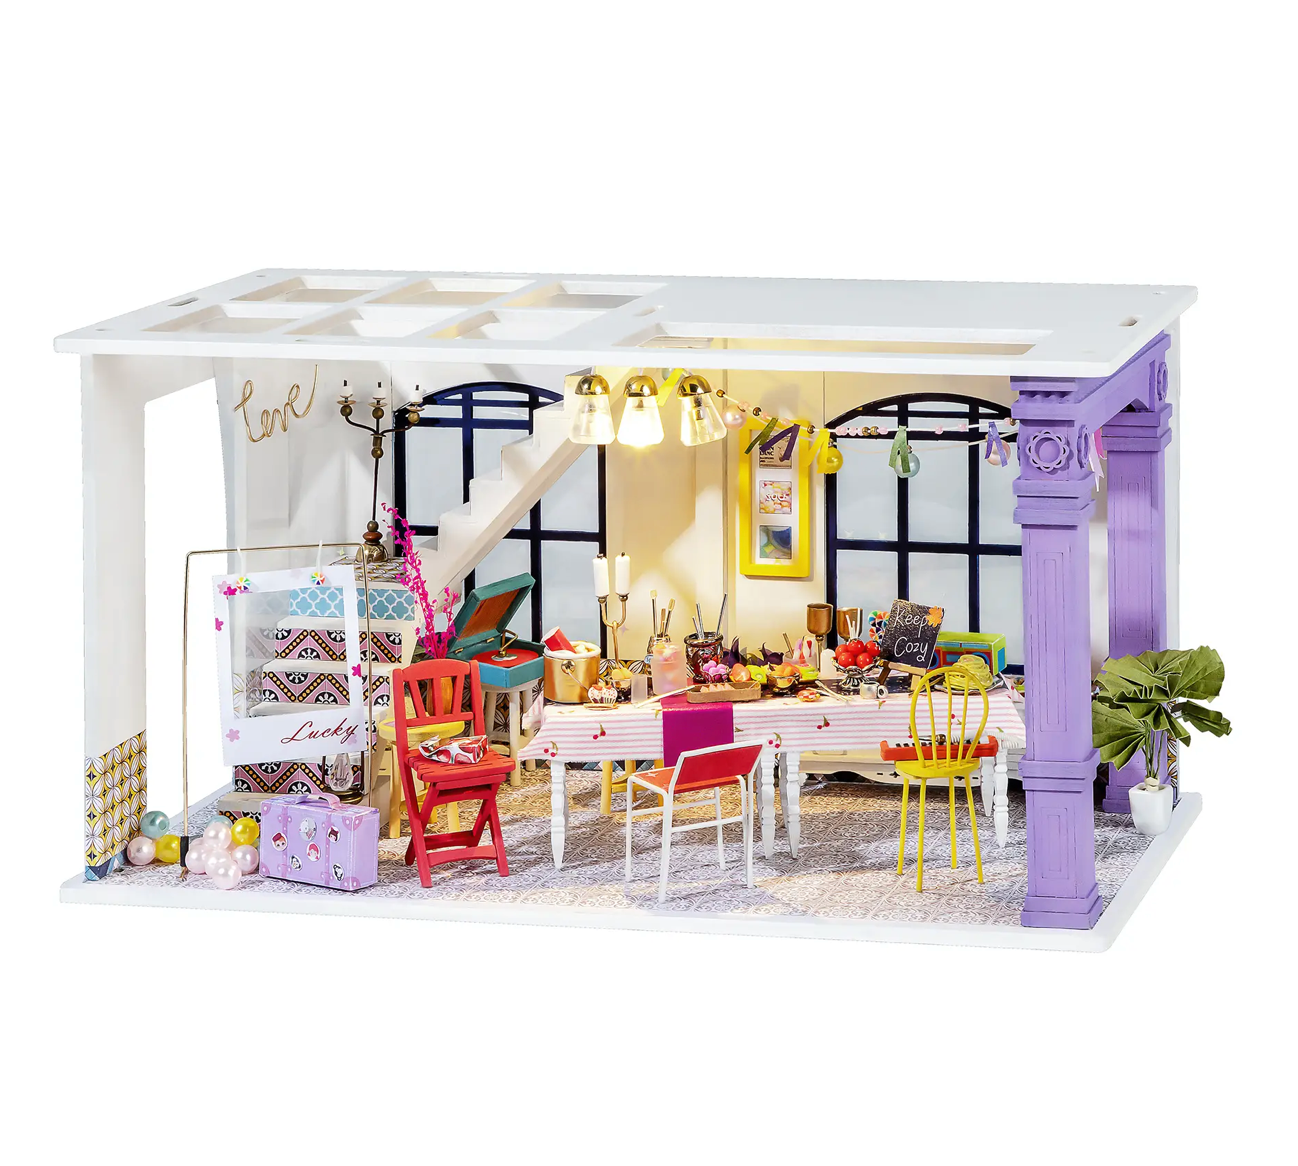 Party Time DIY Miniature Dollhouse Kit